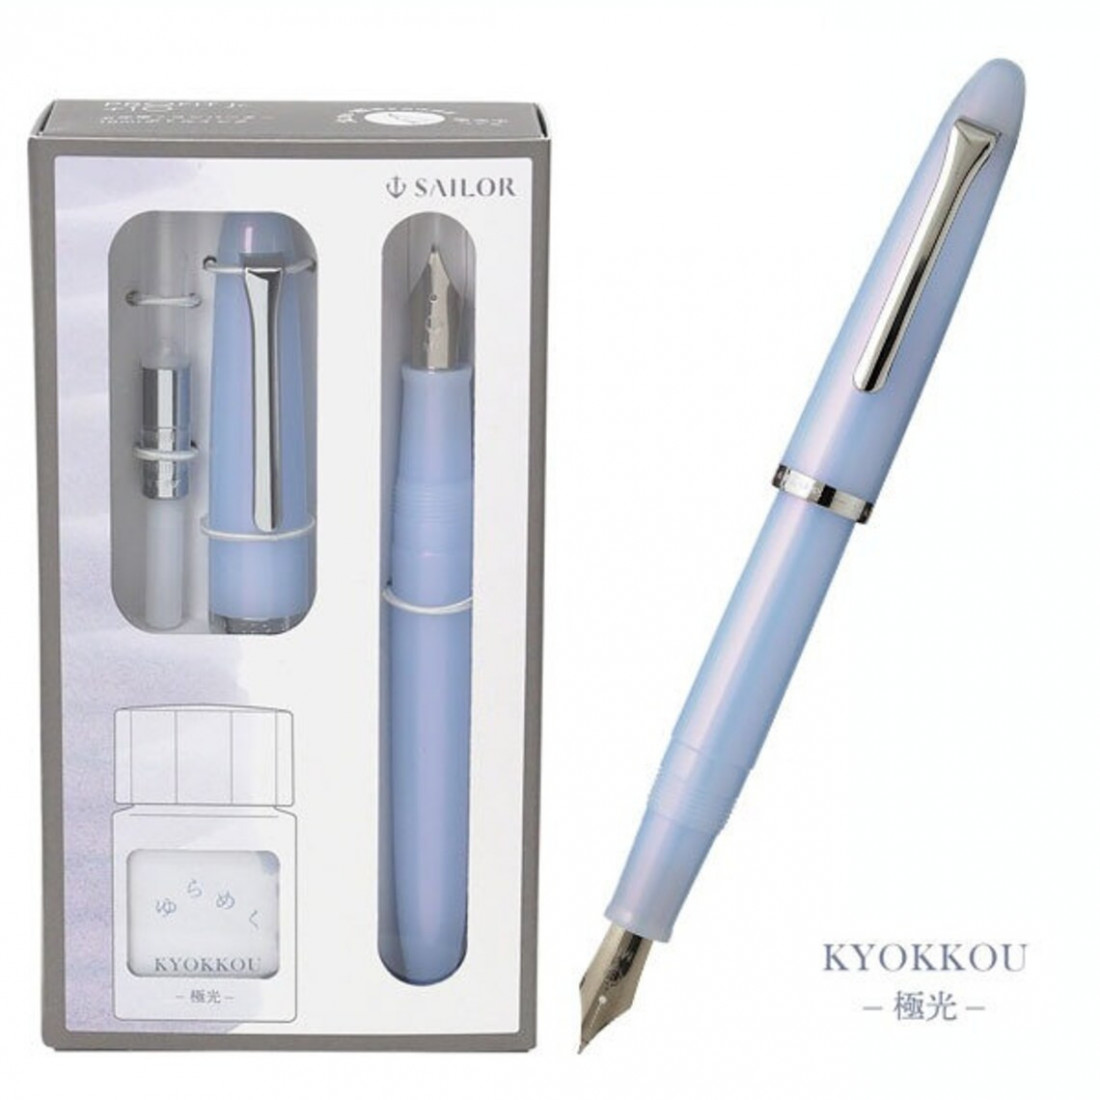 Sailor pen with Fude nib, Limited edition, Profit Jr. plus 10ml Special Ink Kyokkou plus Converter 10-0420-705